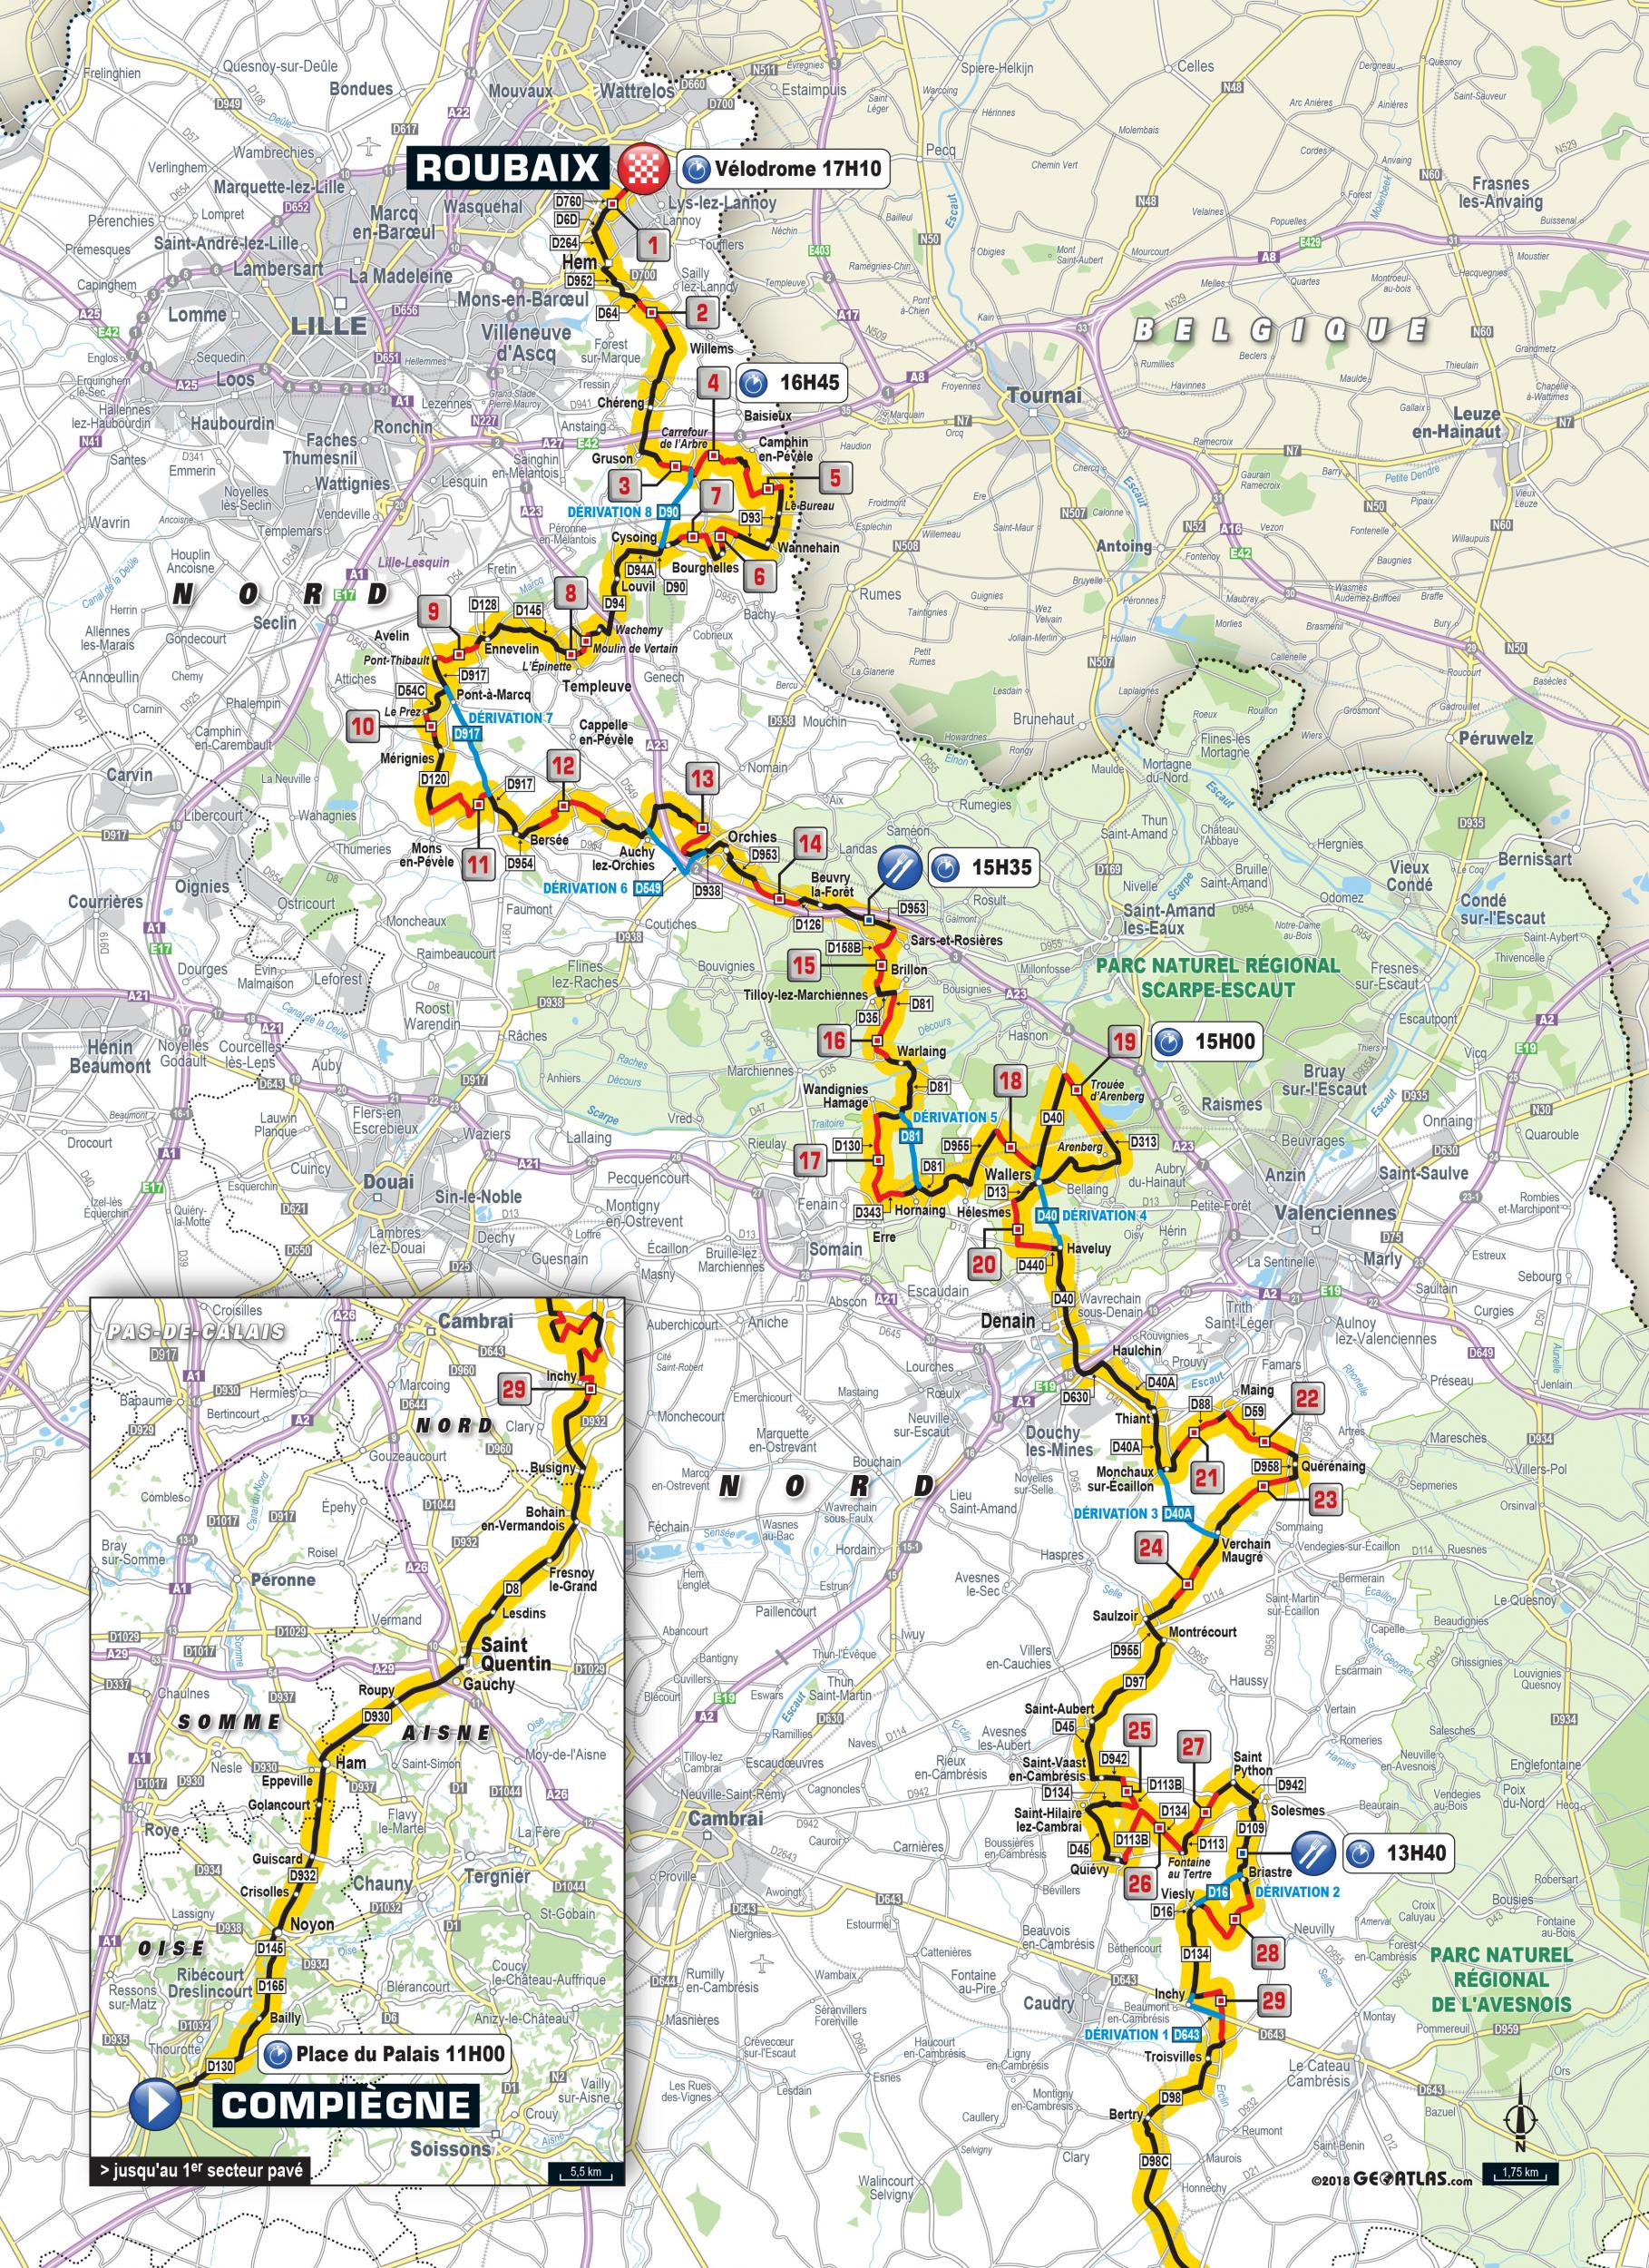 Paris-Roubaix 2018 route